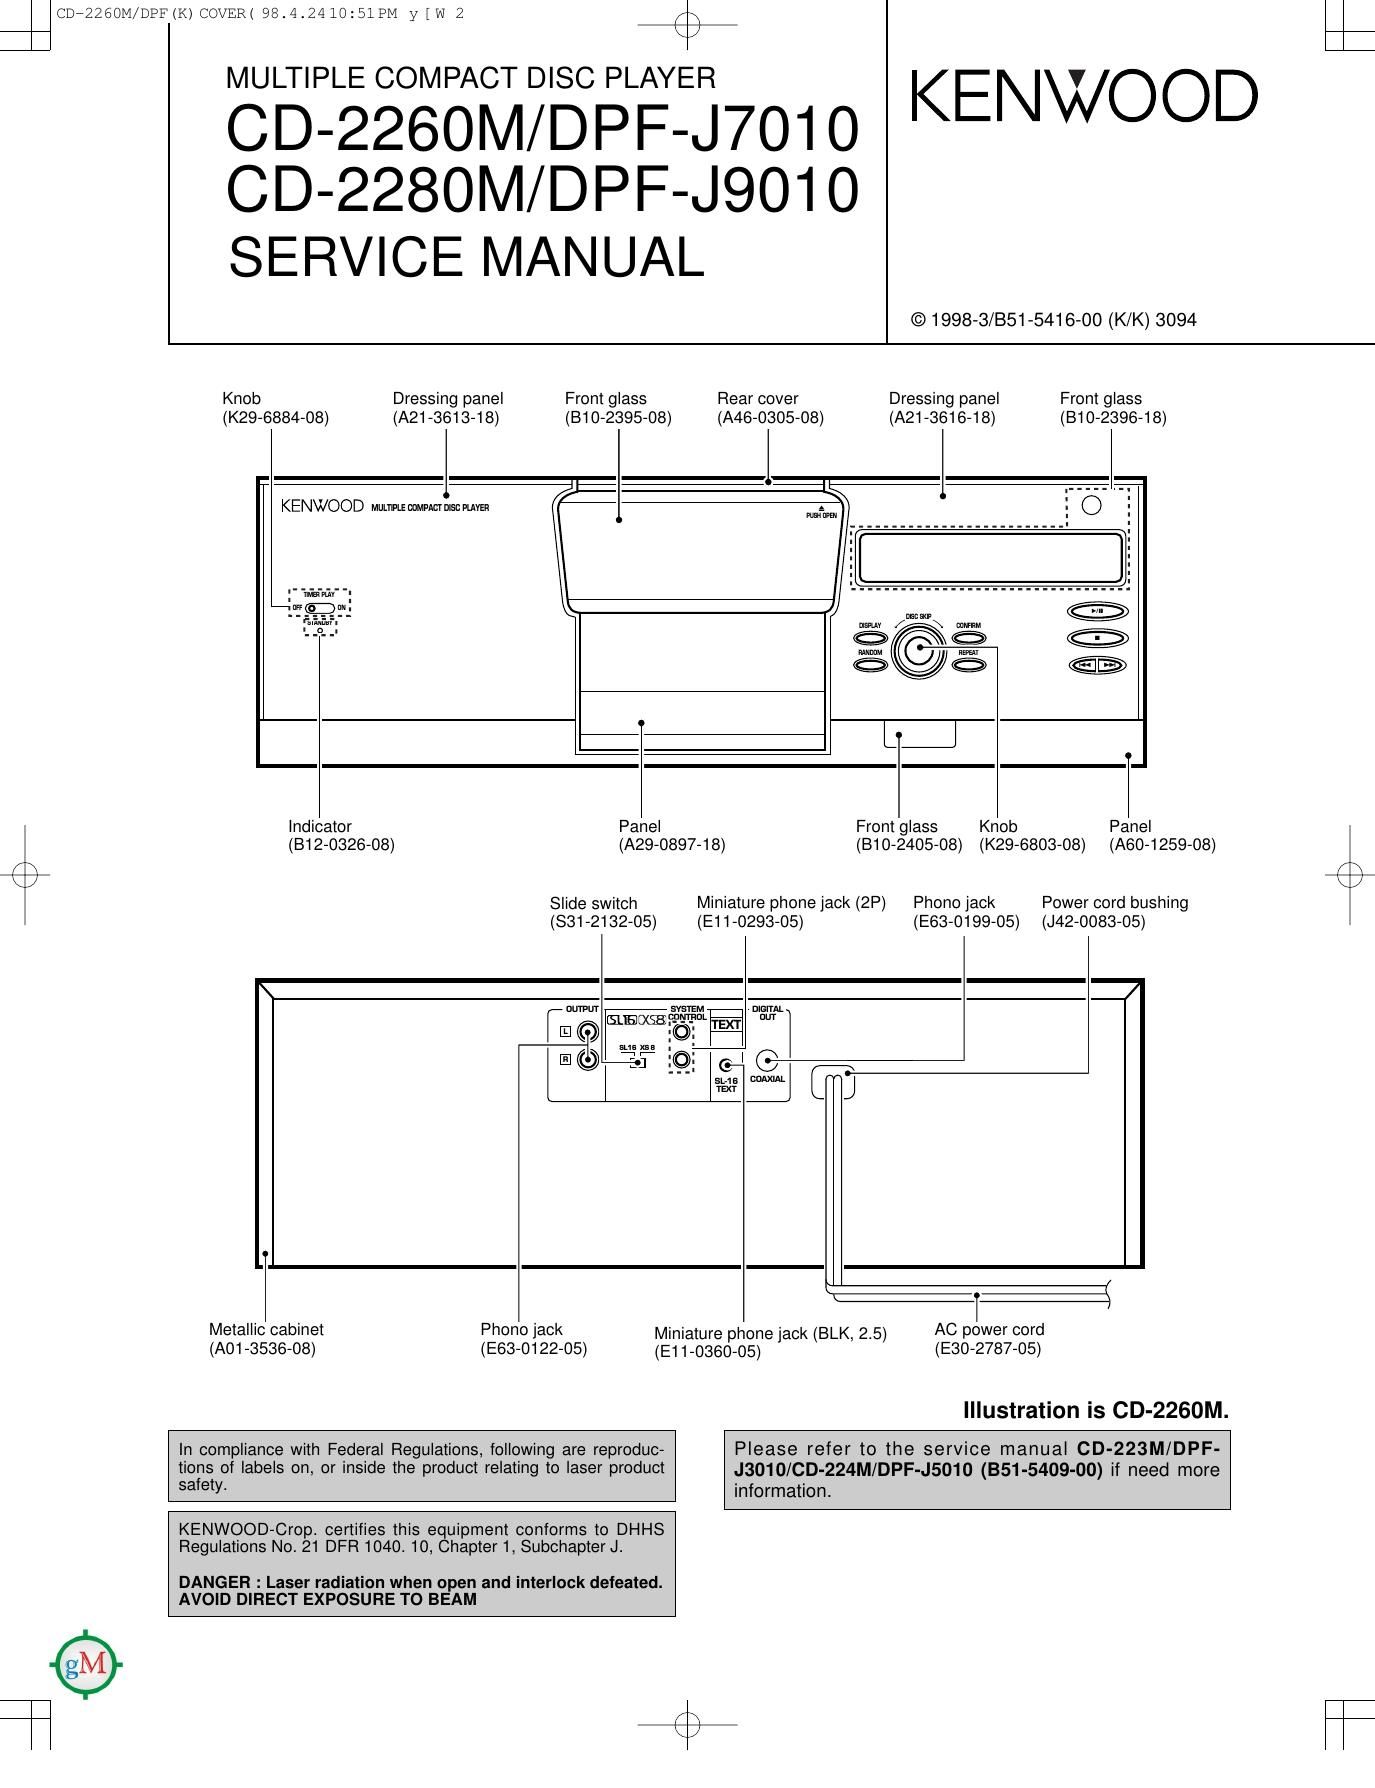 Kenwood DPFJ 7010 Service Manual